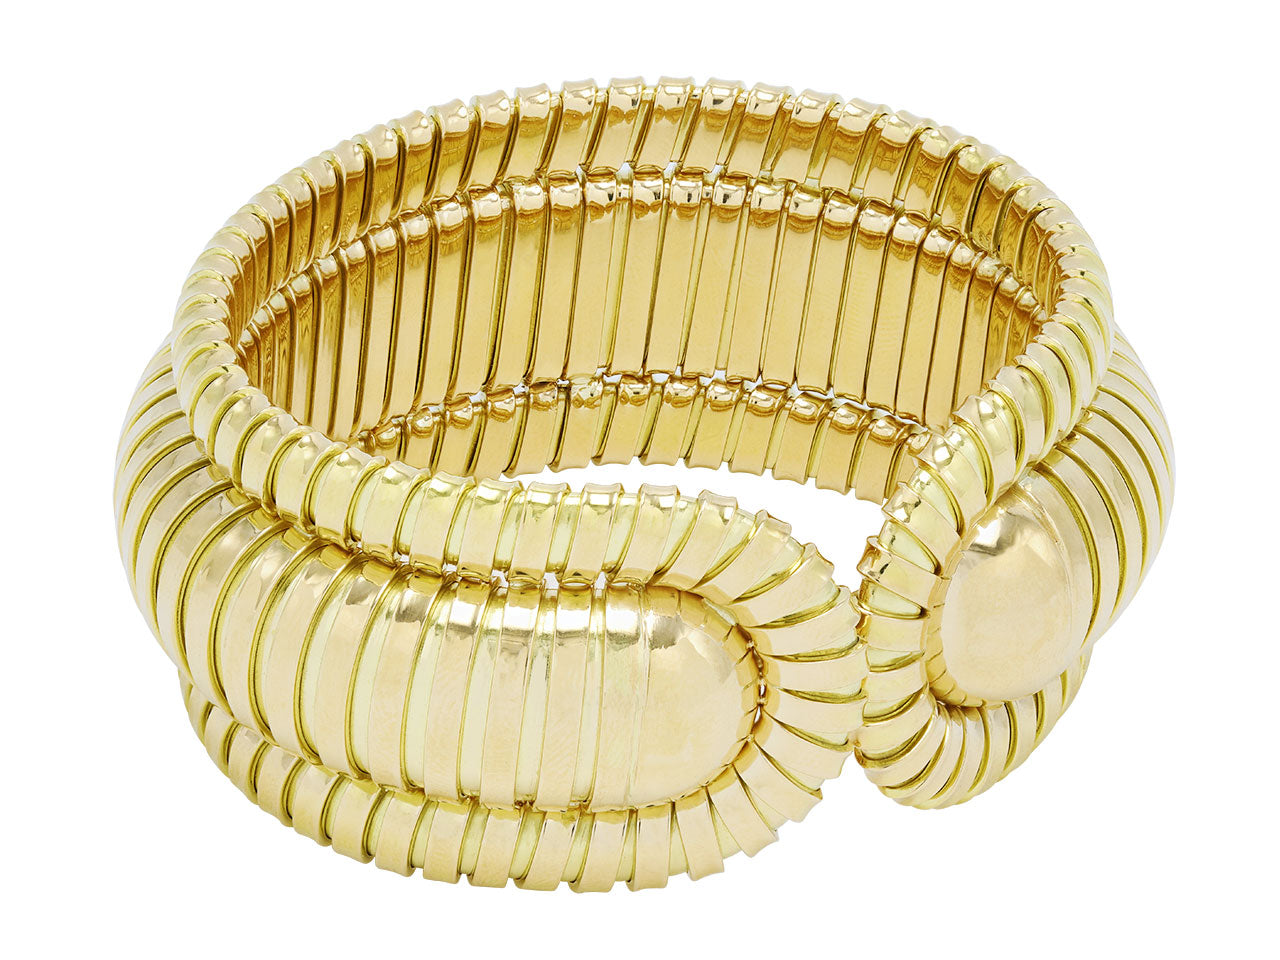 Bordered Domed Cuff Bracelet in 18K Gold, by Beladora